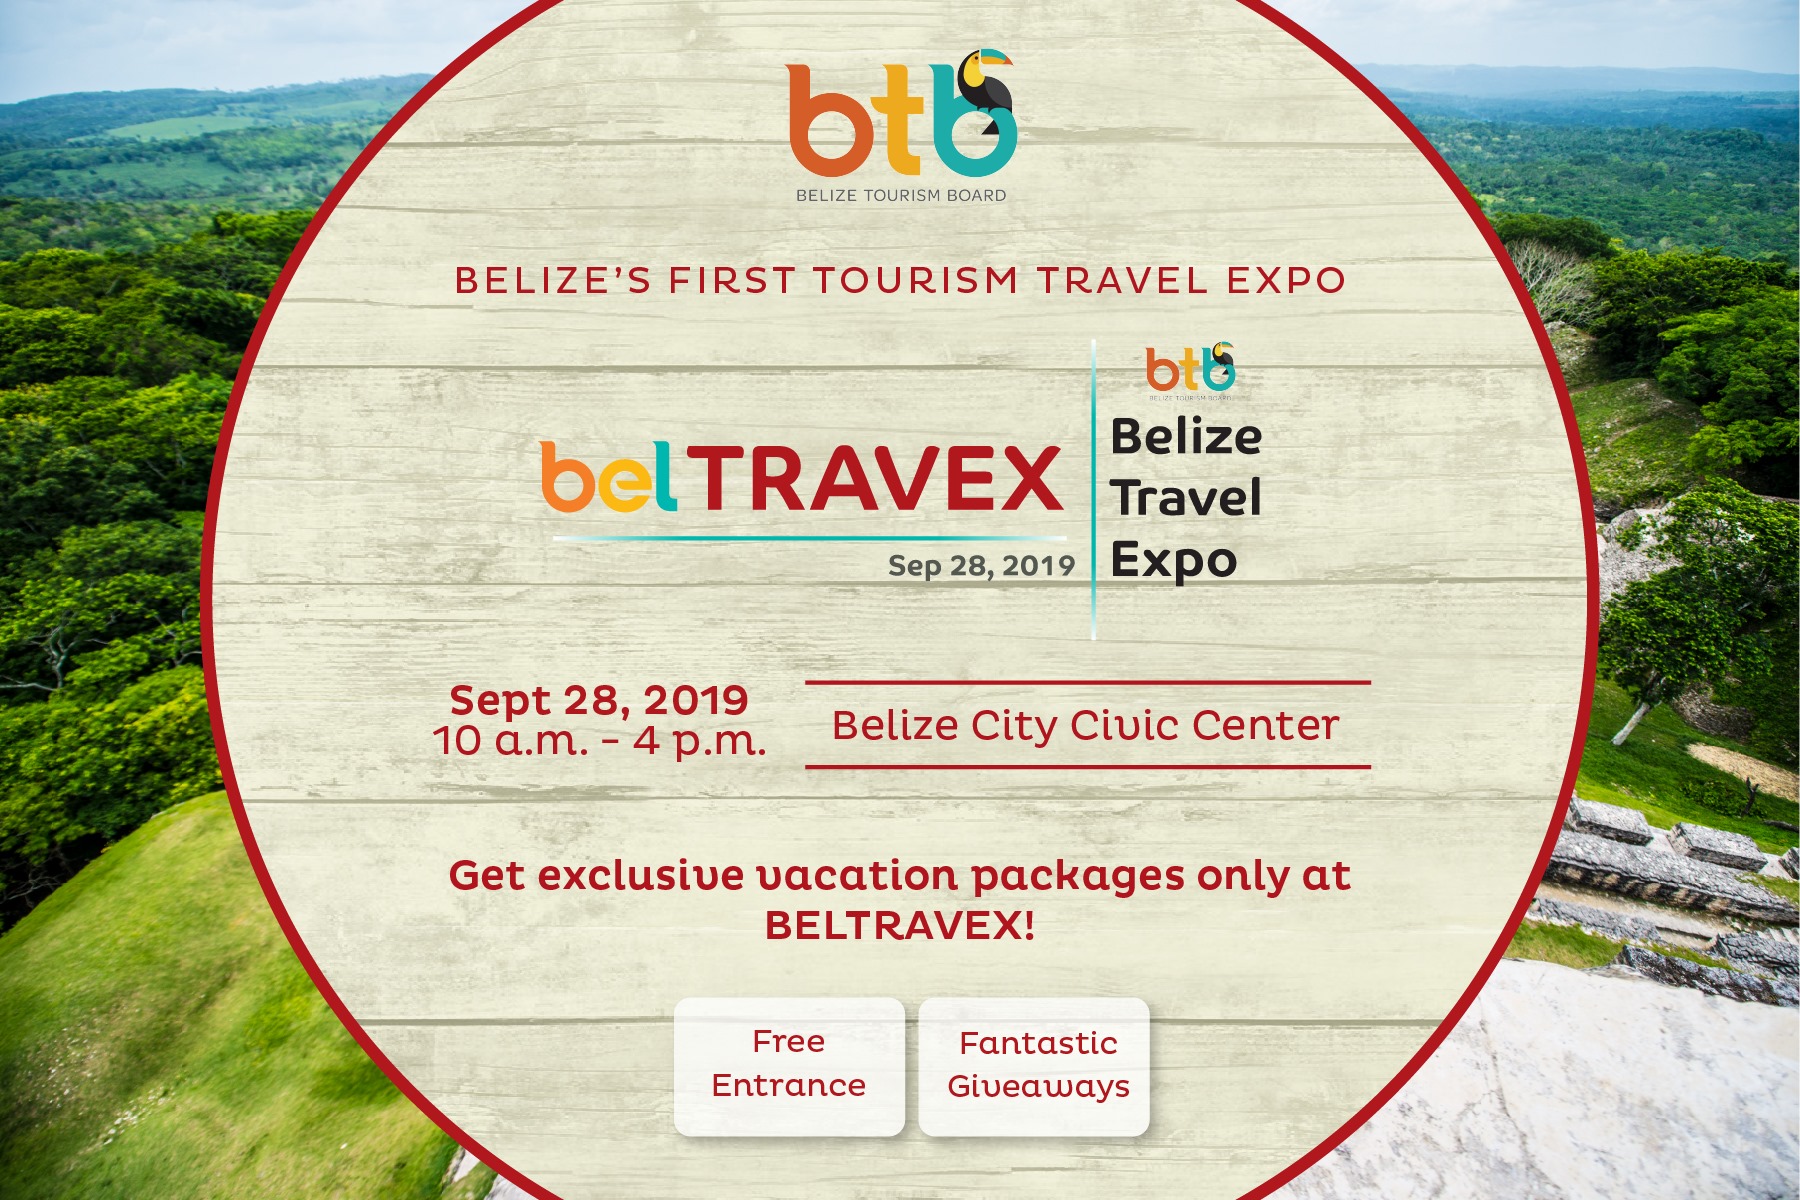 belize tourism board application form